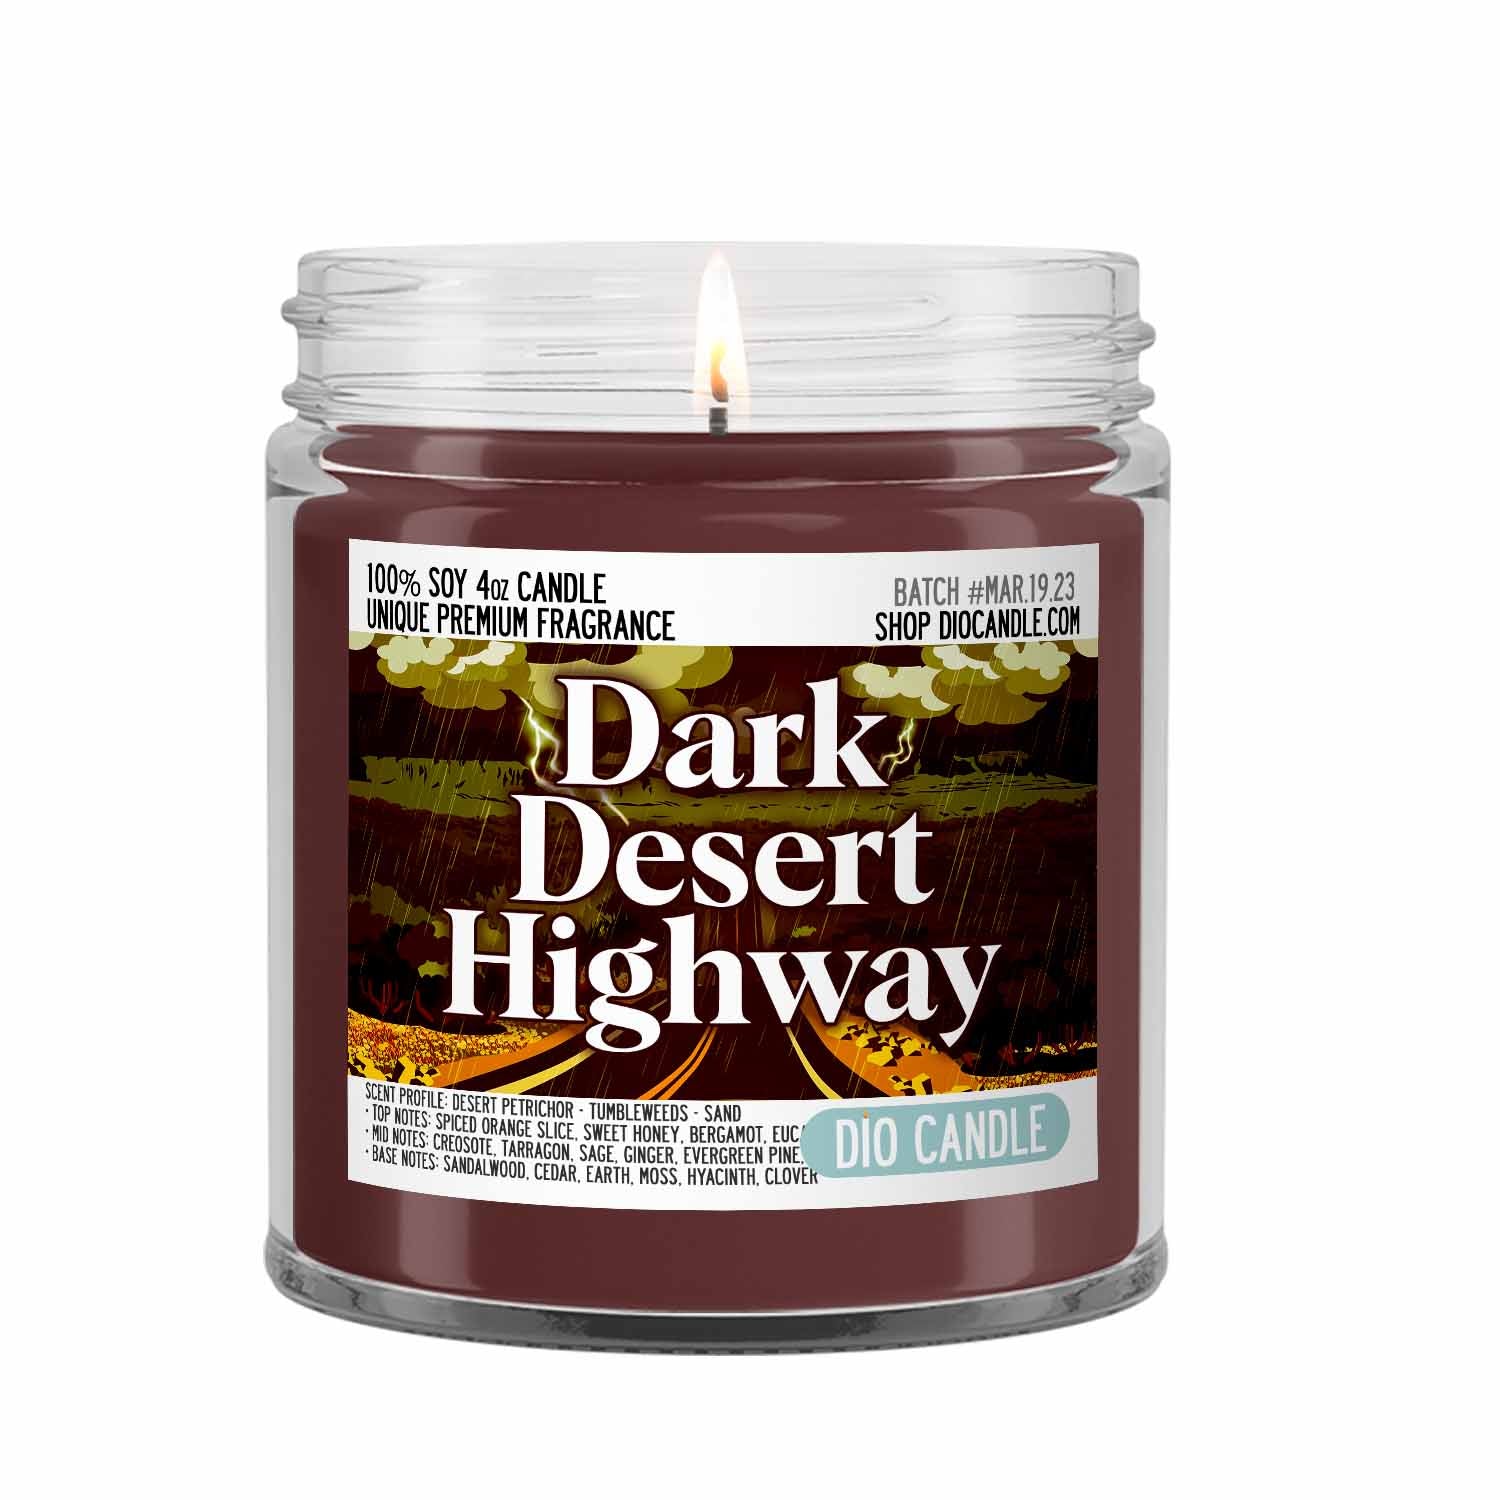 Dark Desert Highway Candle